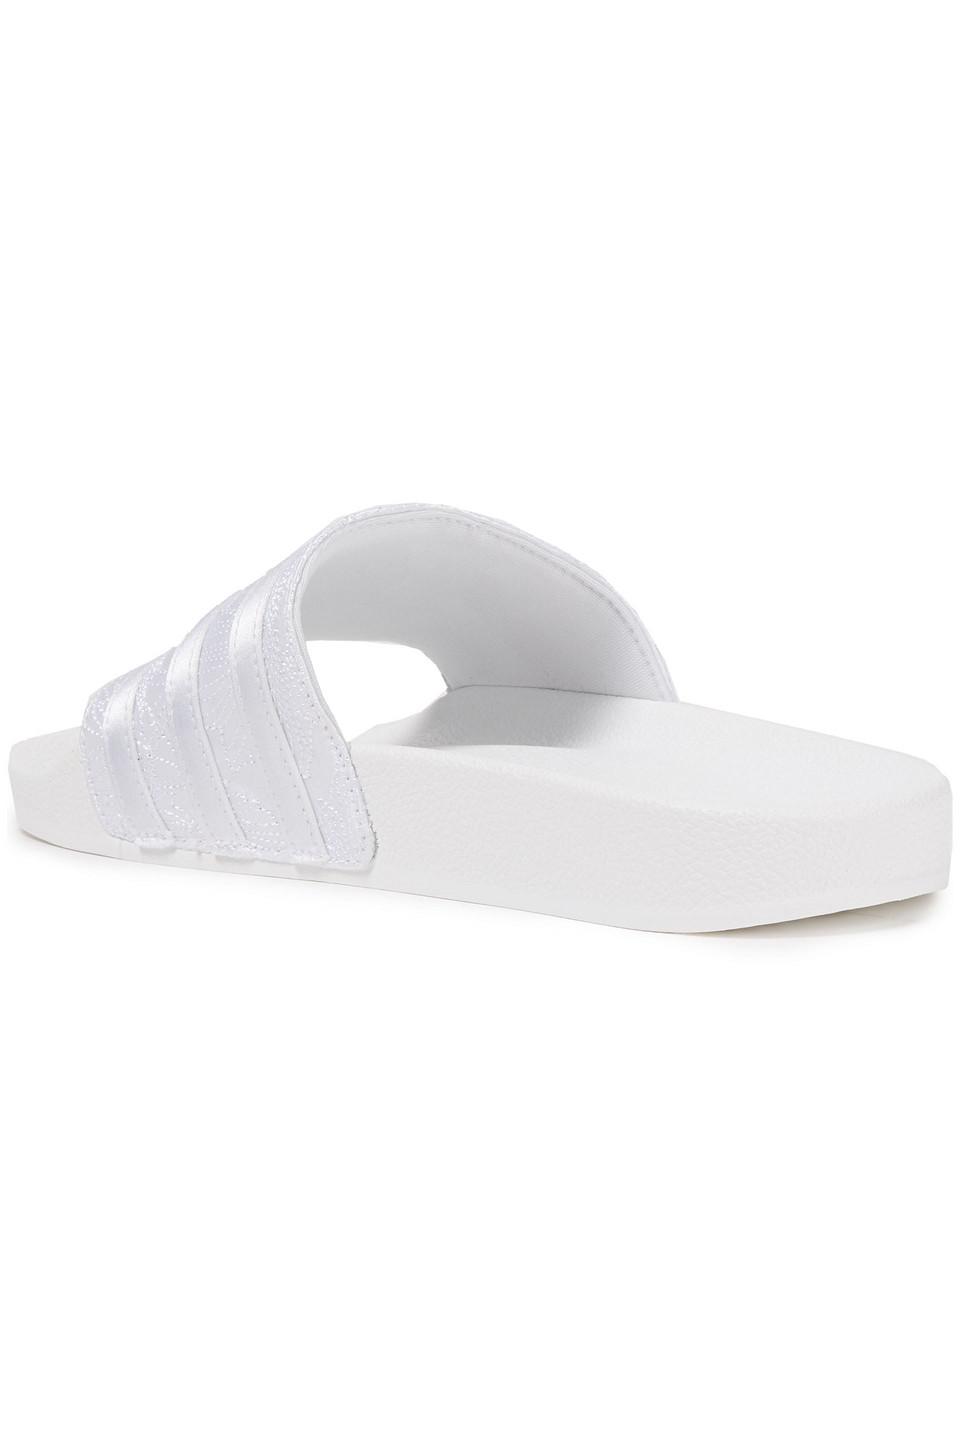 adidas Originals Adilette Embroidered Satin Slides in White | Lyst Canada